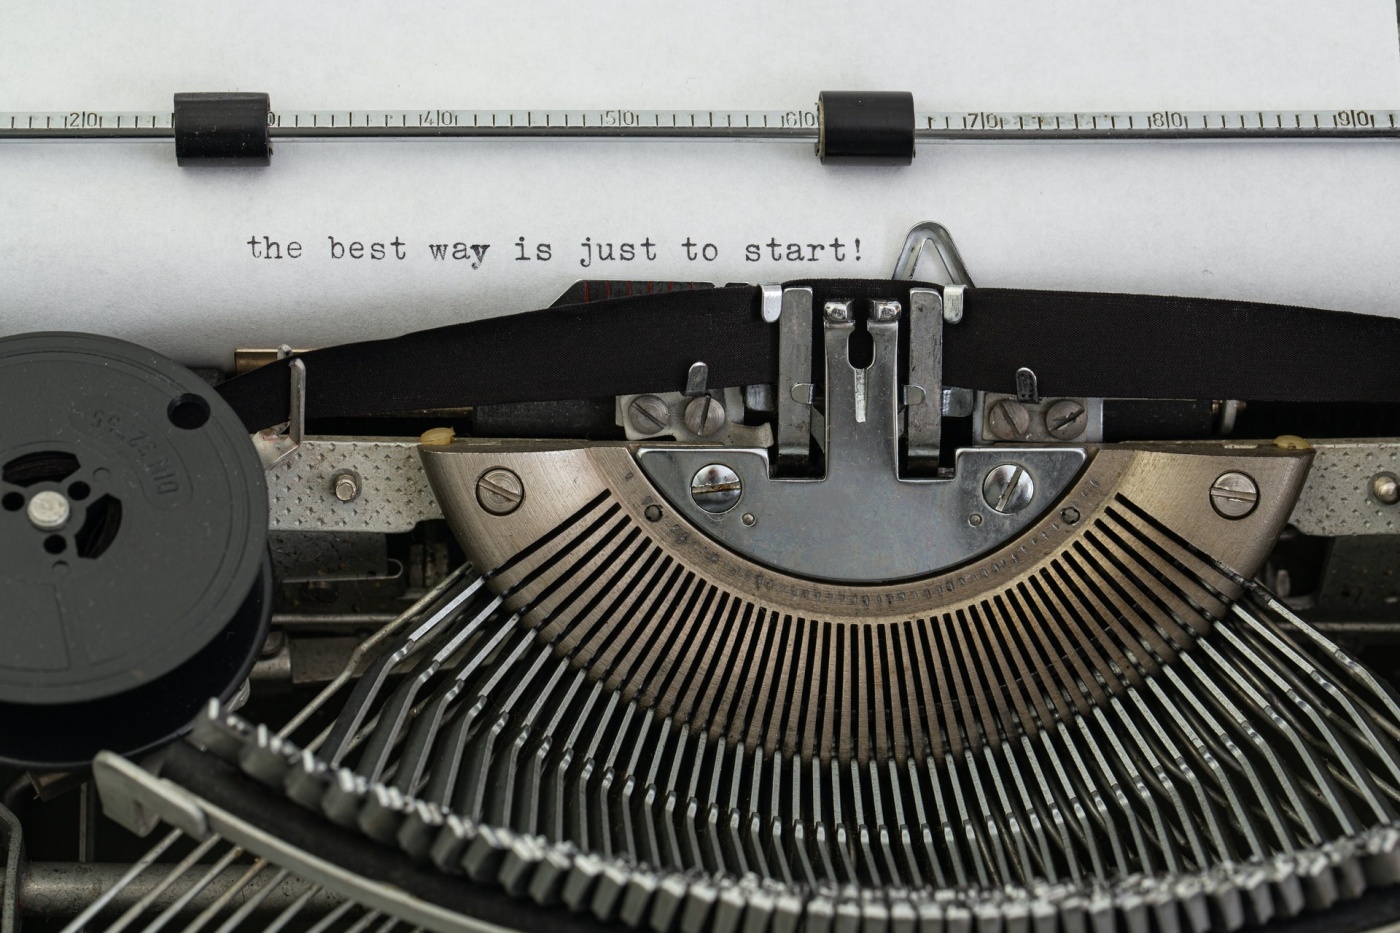 "The best way is just to start!" written on a typewriter.